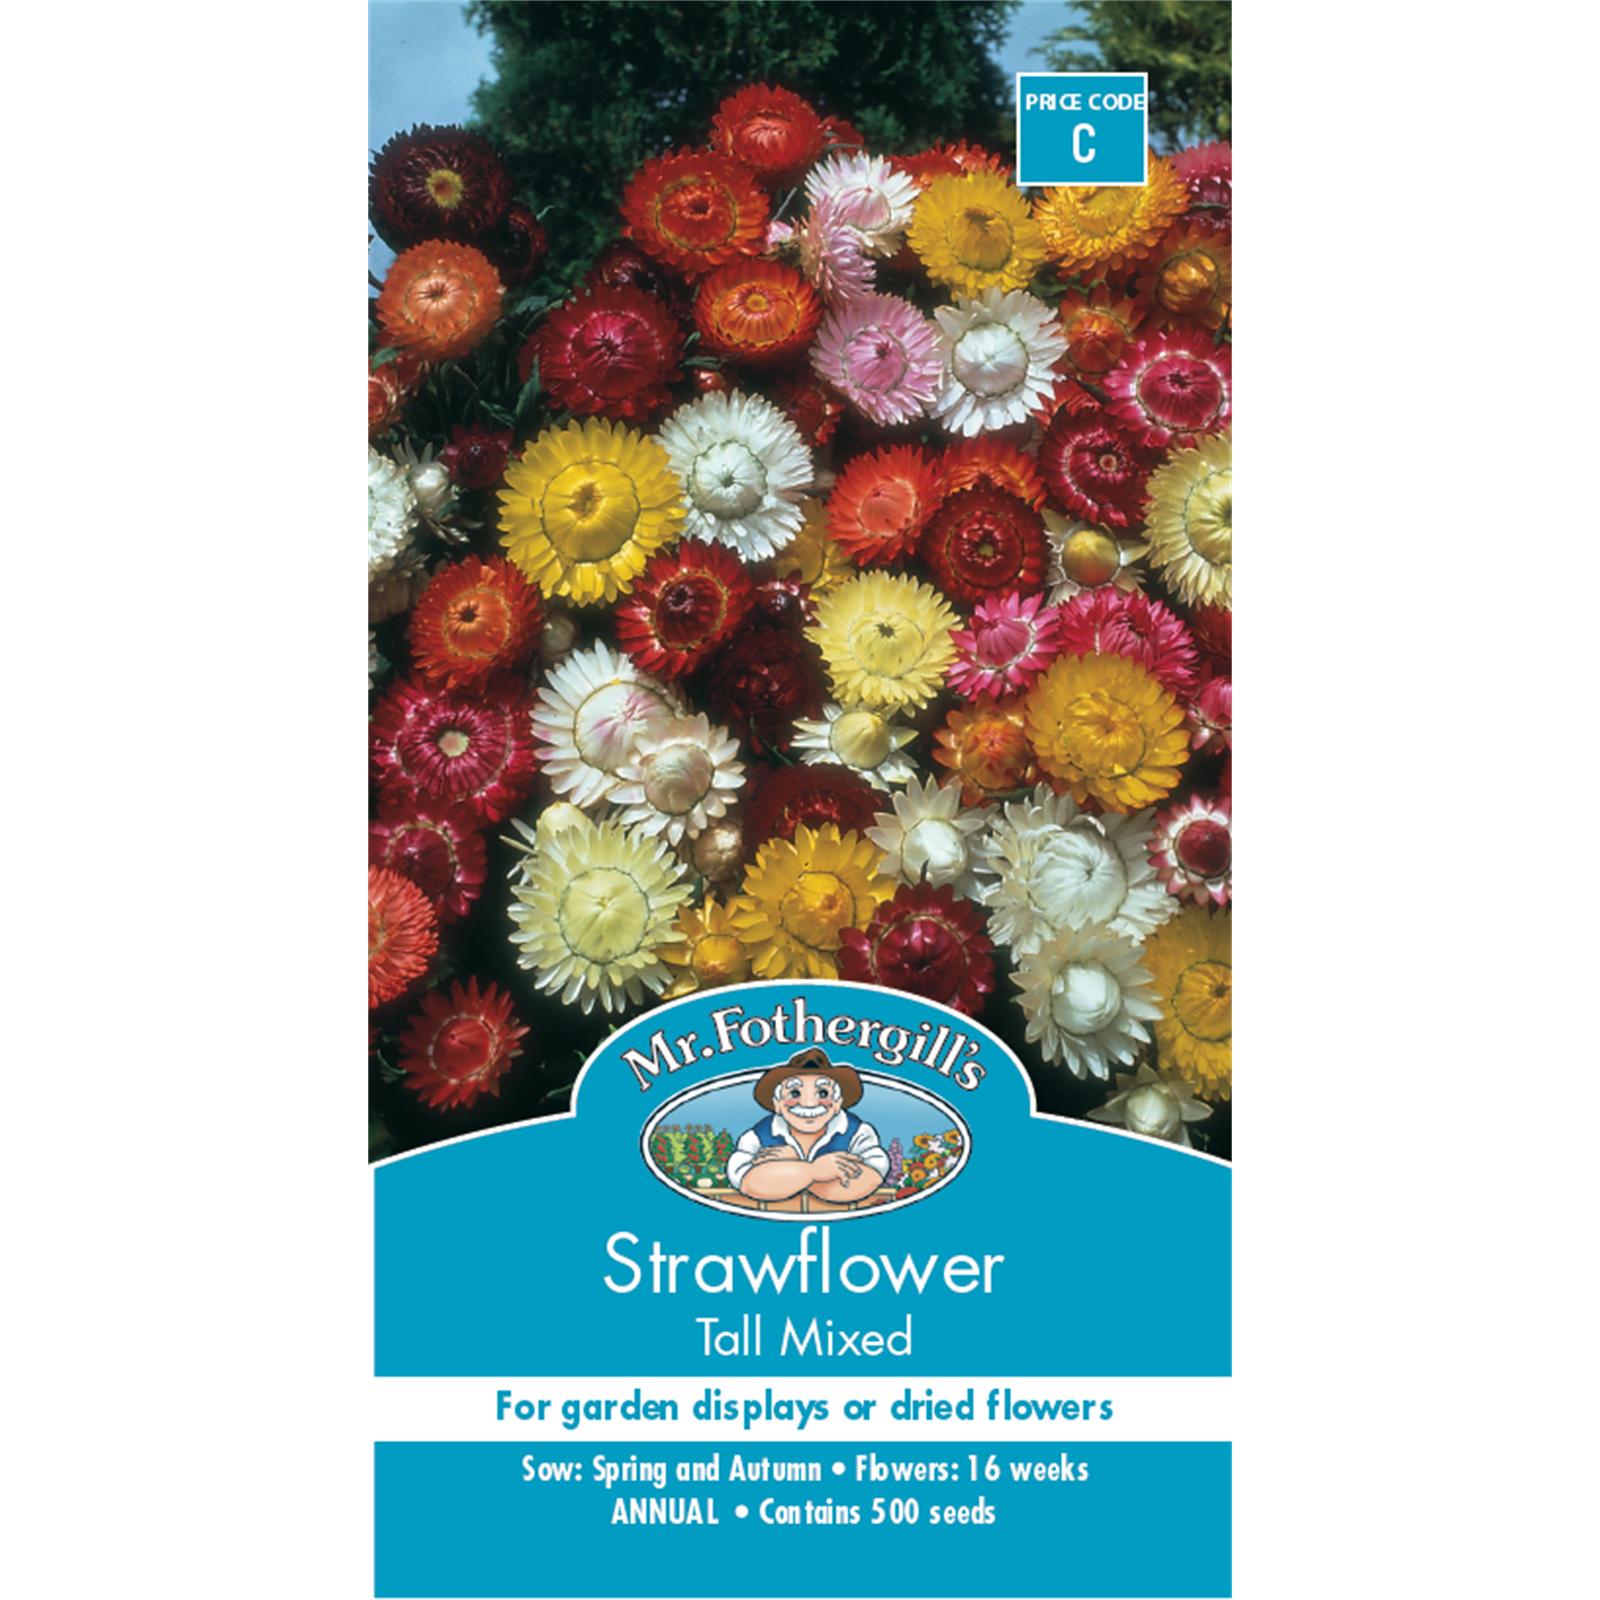 Mr Fothergill's Strawflower Tall Mixed Flower Seeds